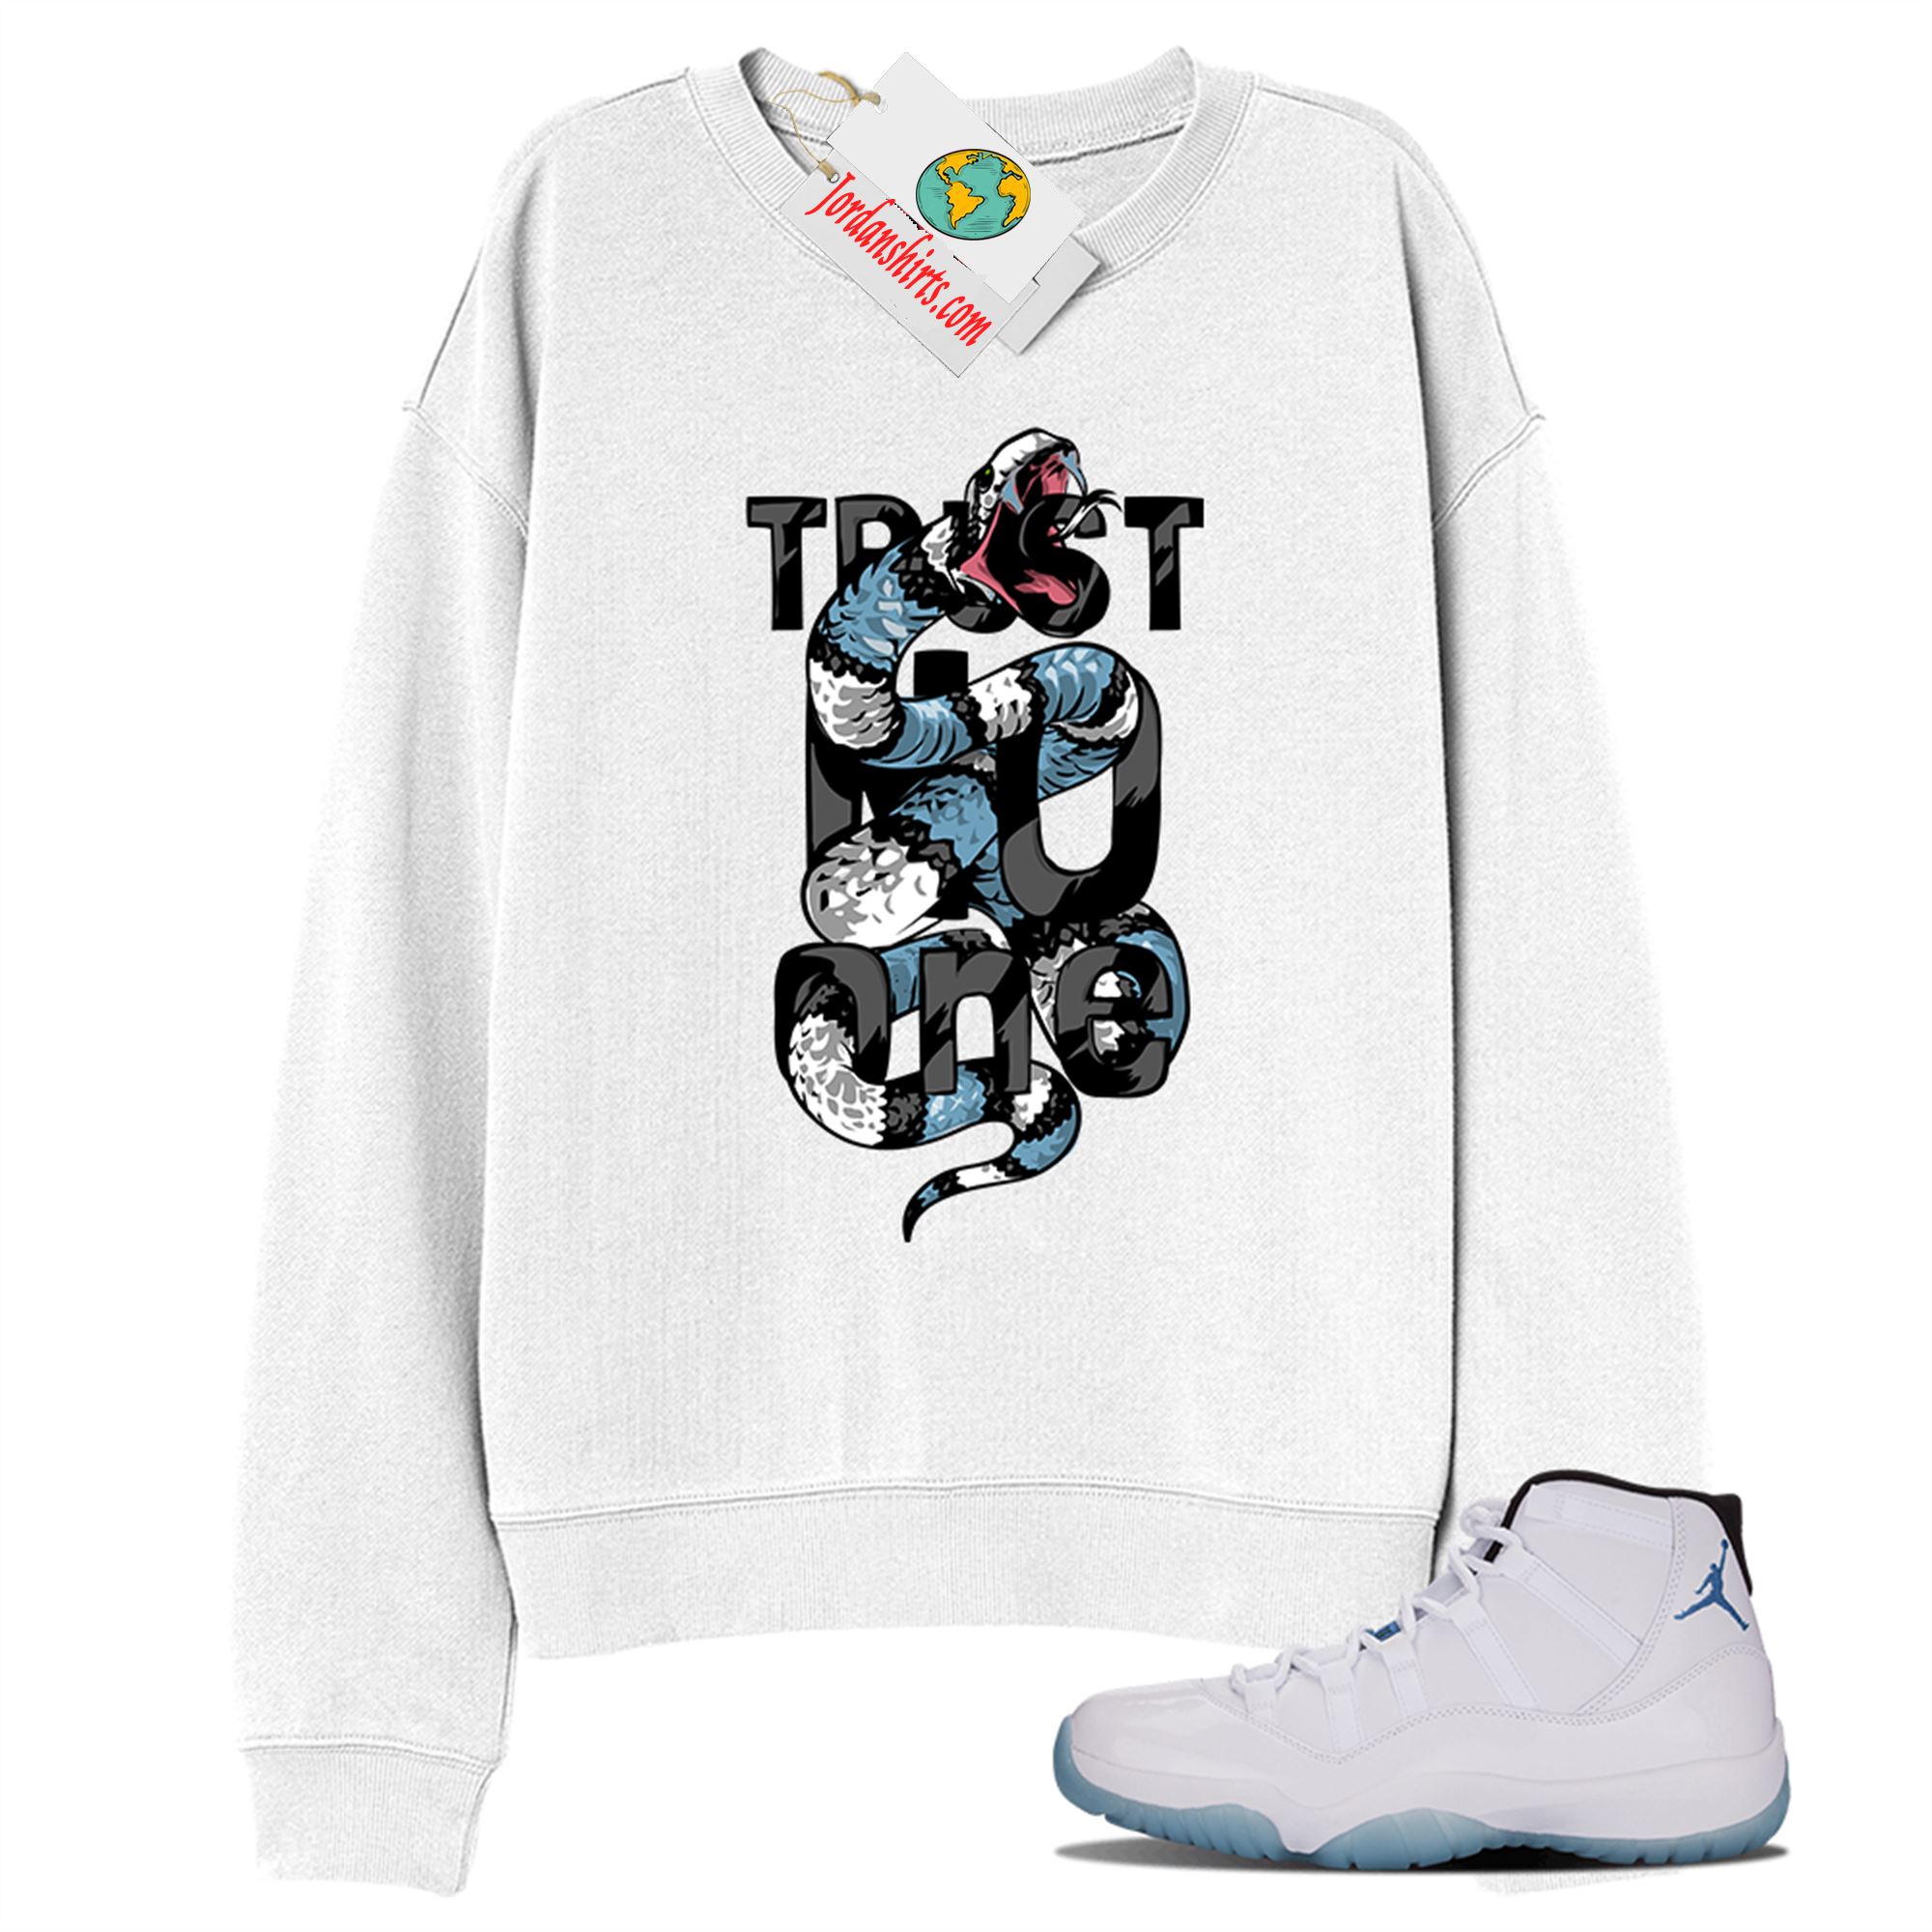 Jordan 11 Sweatshirt, Trust No One King Snake White Sweatshirt Air Jordan 11 Legend Blue 11s Size Up To 5xl